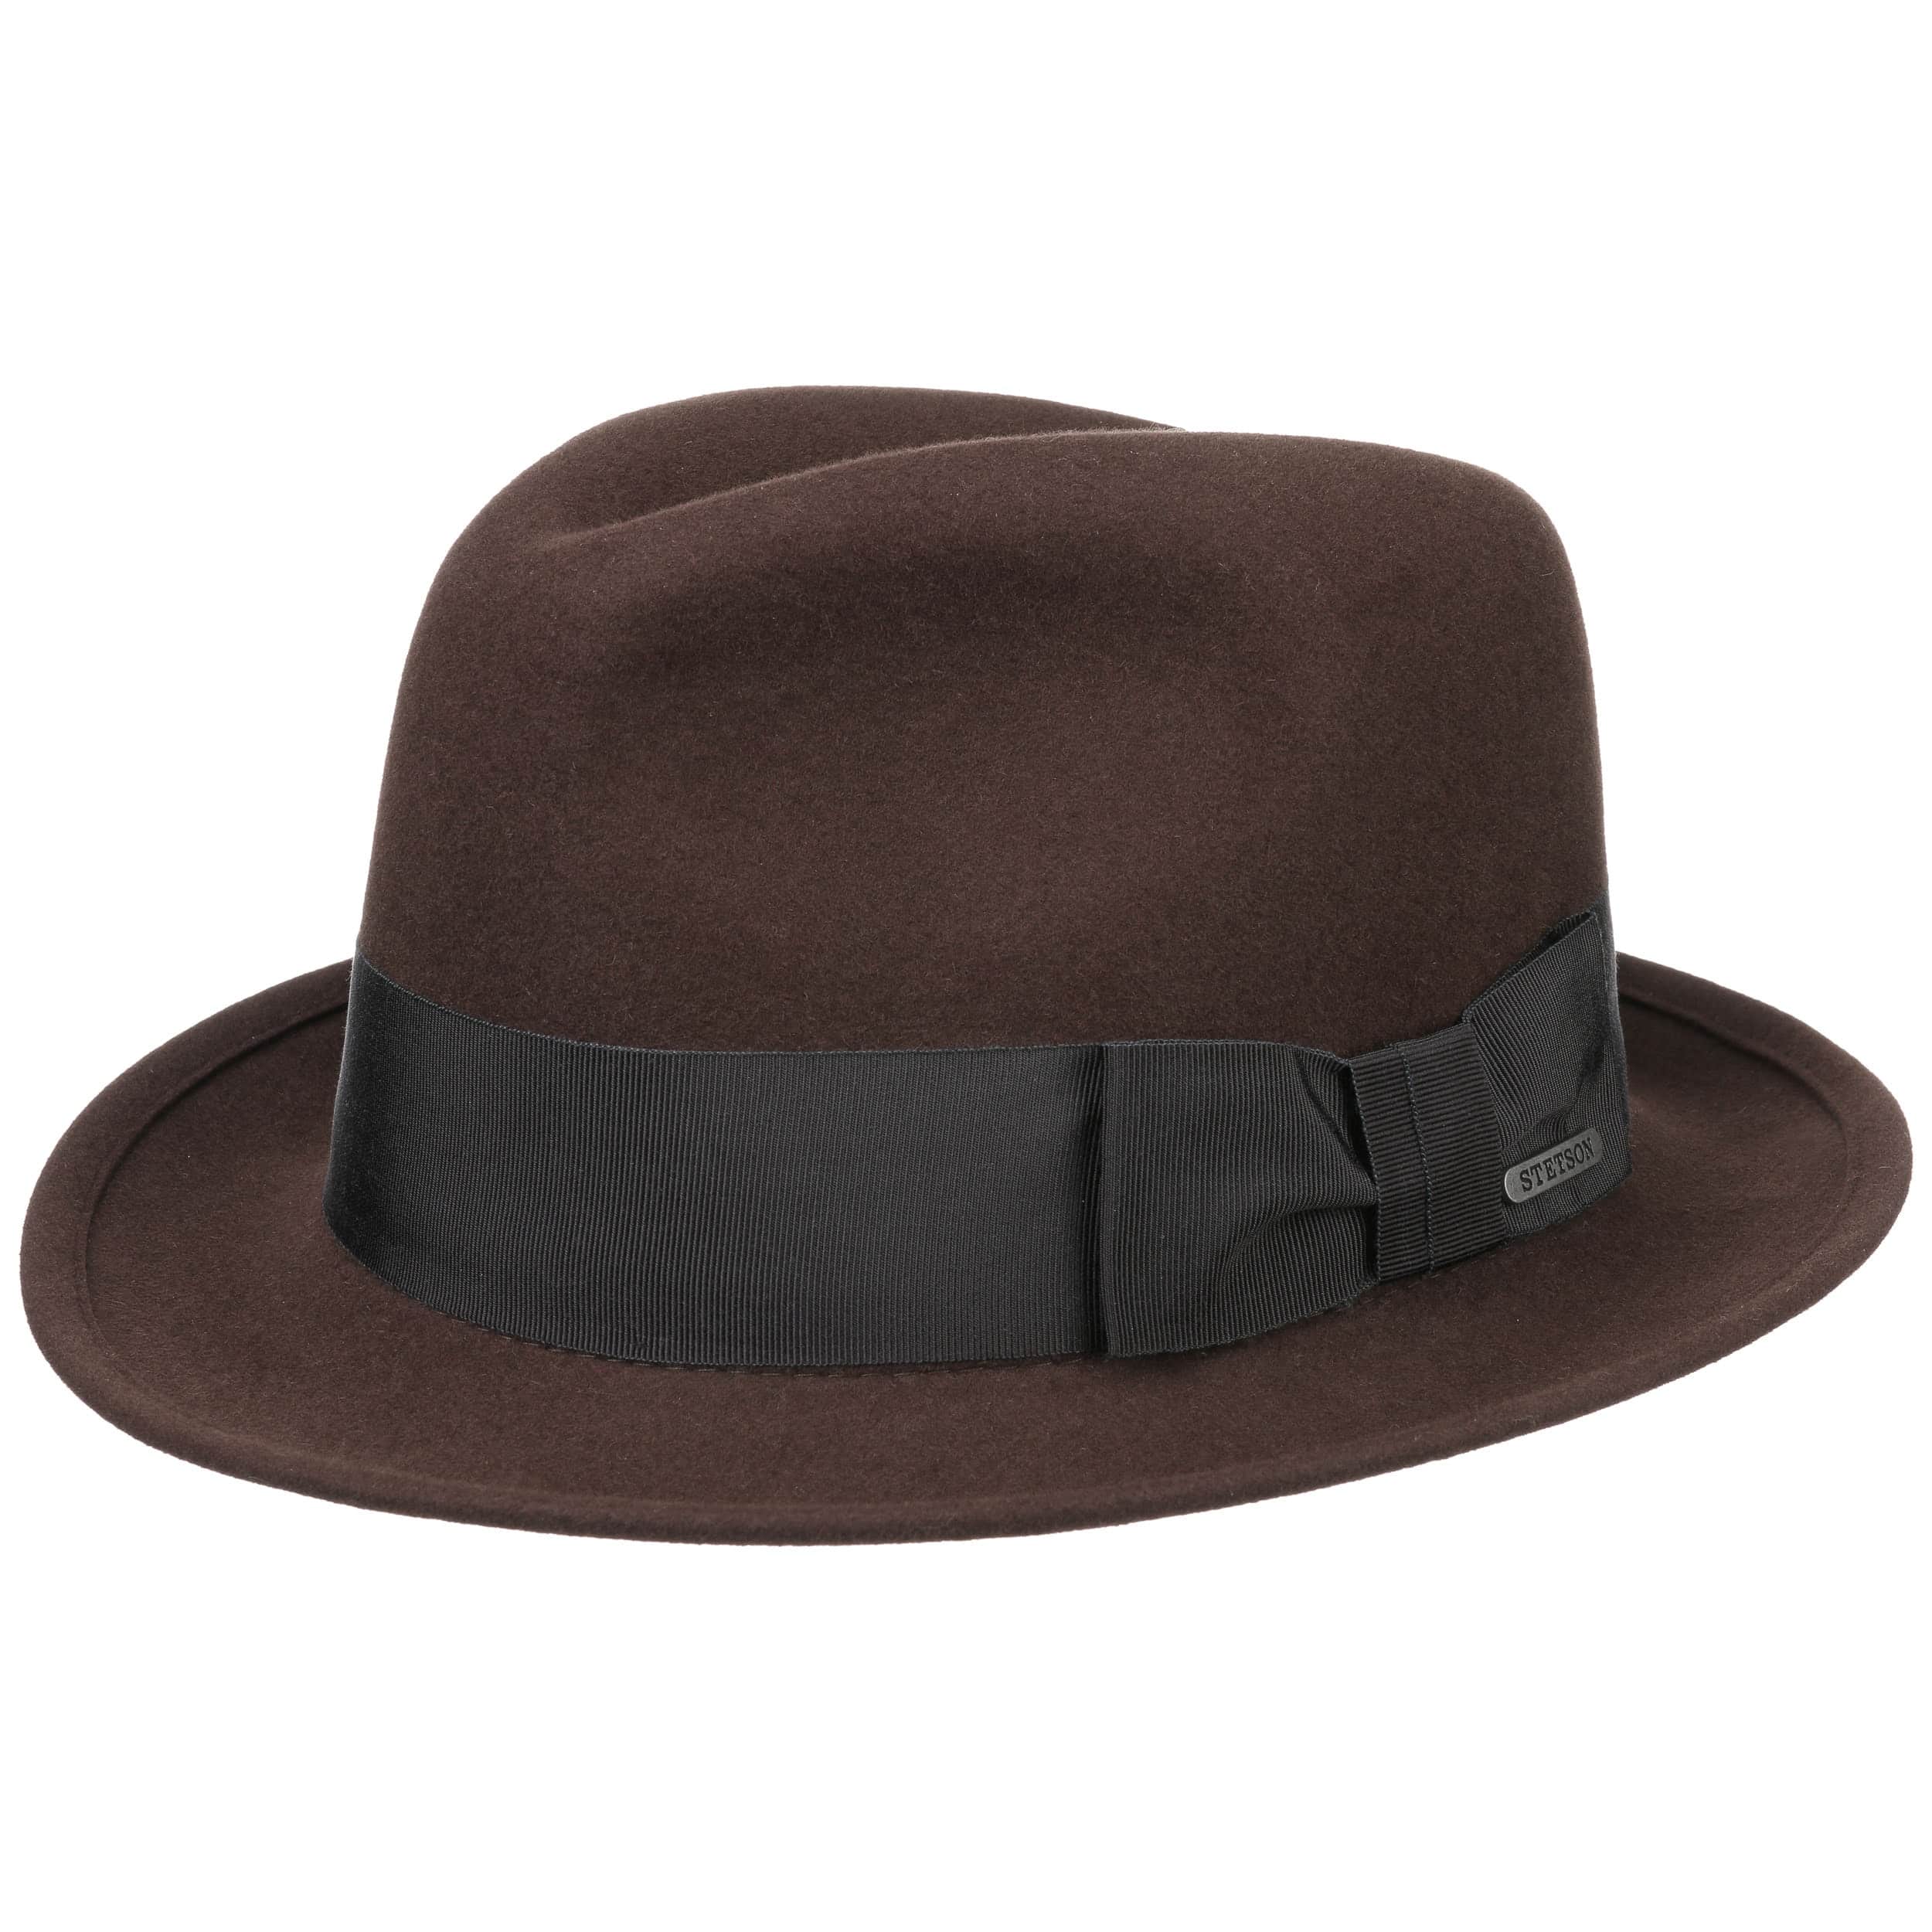 Marico Player Hat Fur Felt Hat by Stetson - 159,00